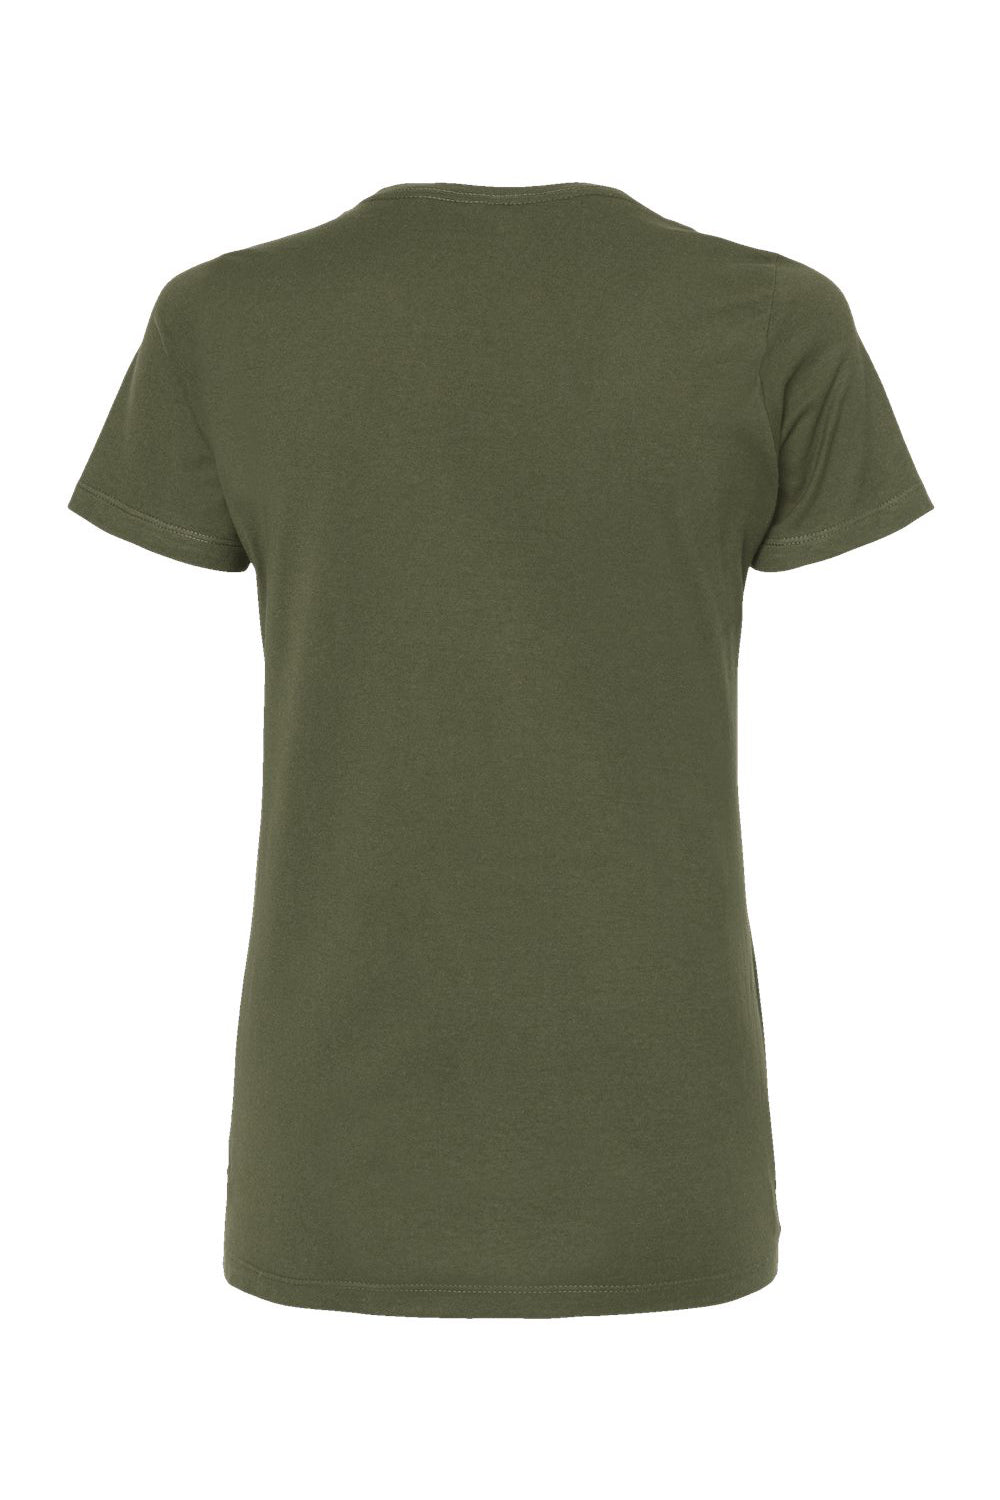 Tultex 516 Womens Premium Short Sleeve Crewneck T-Shirt Olive Green Flat Back